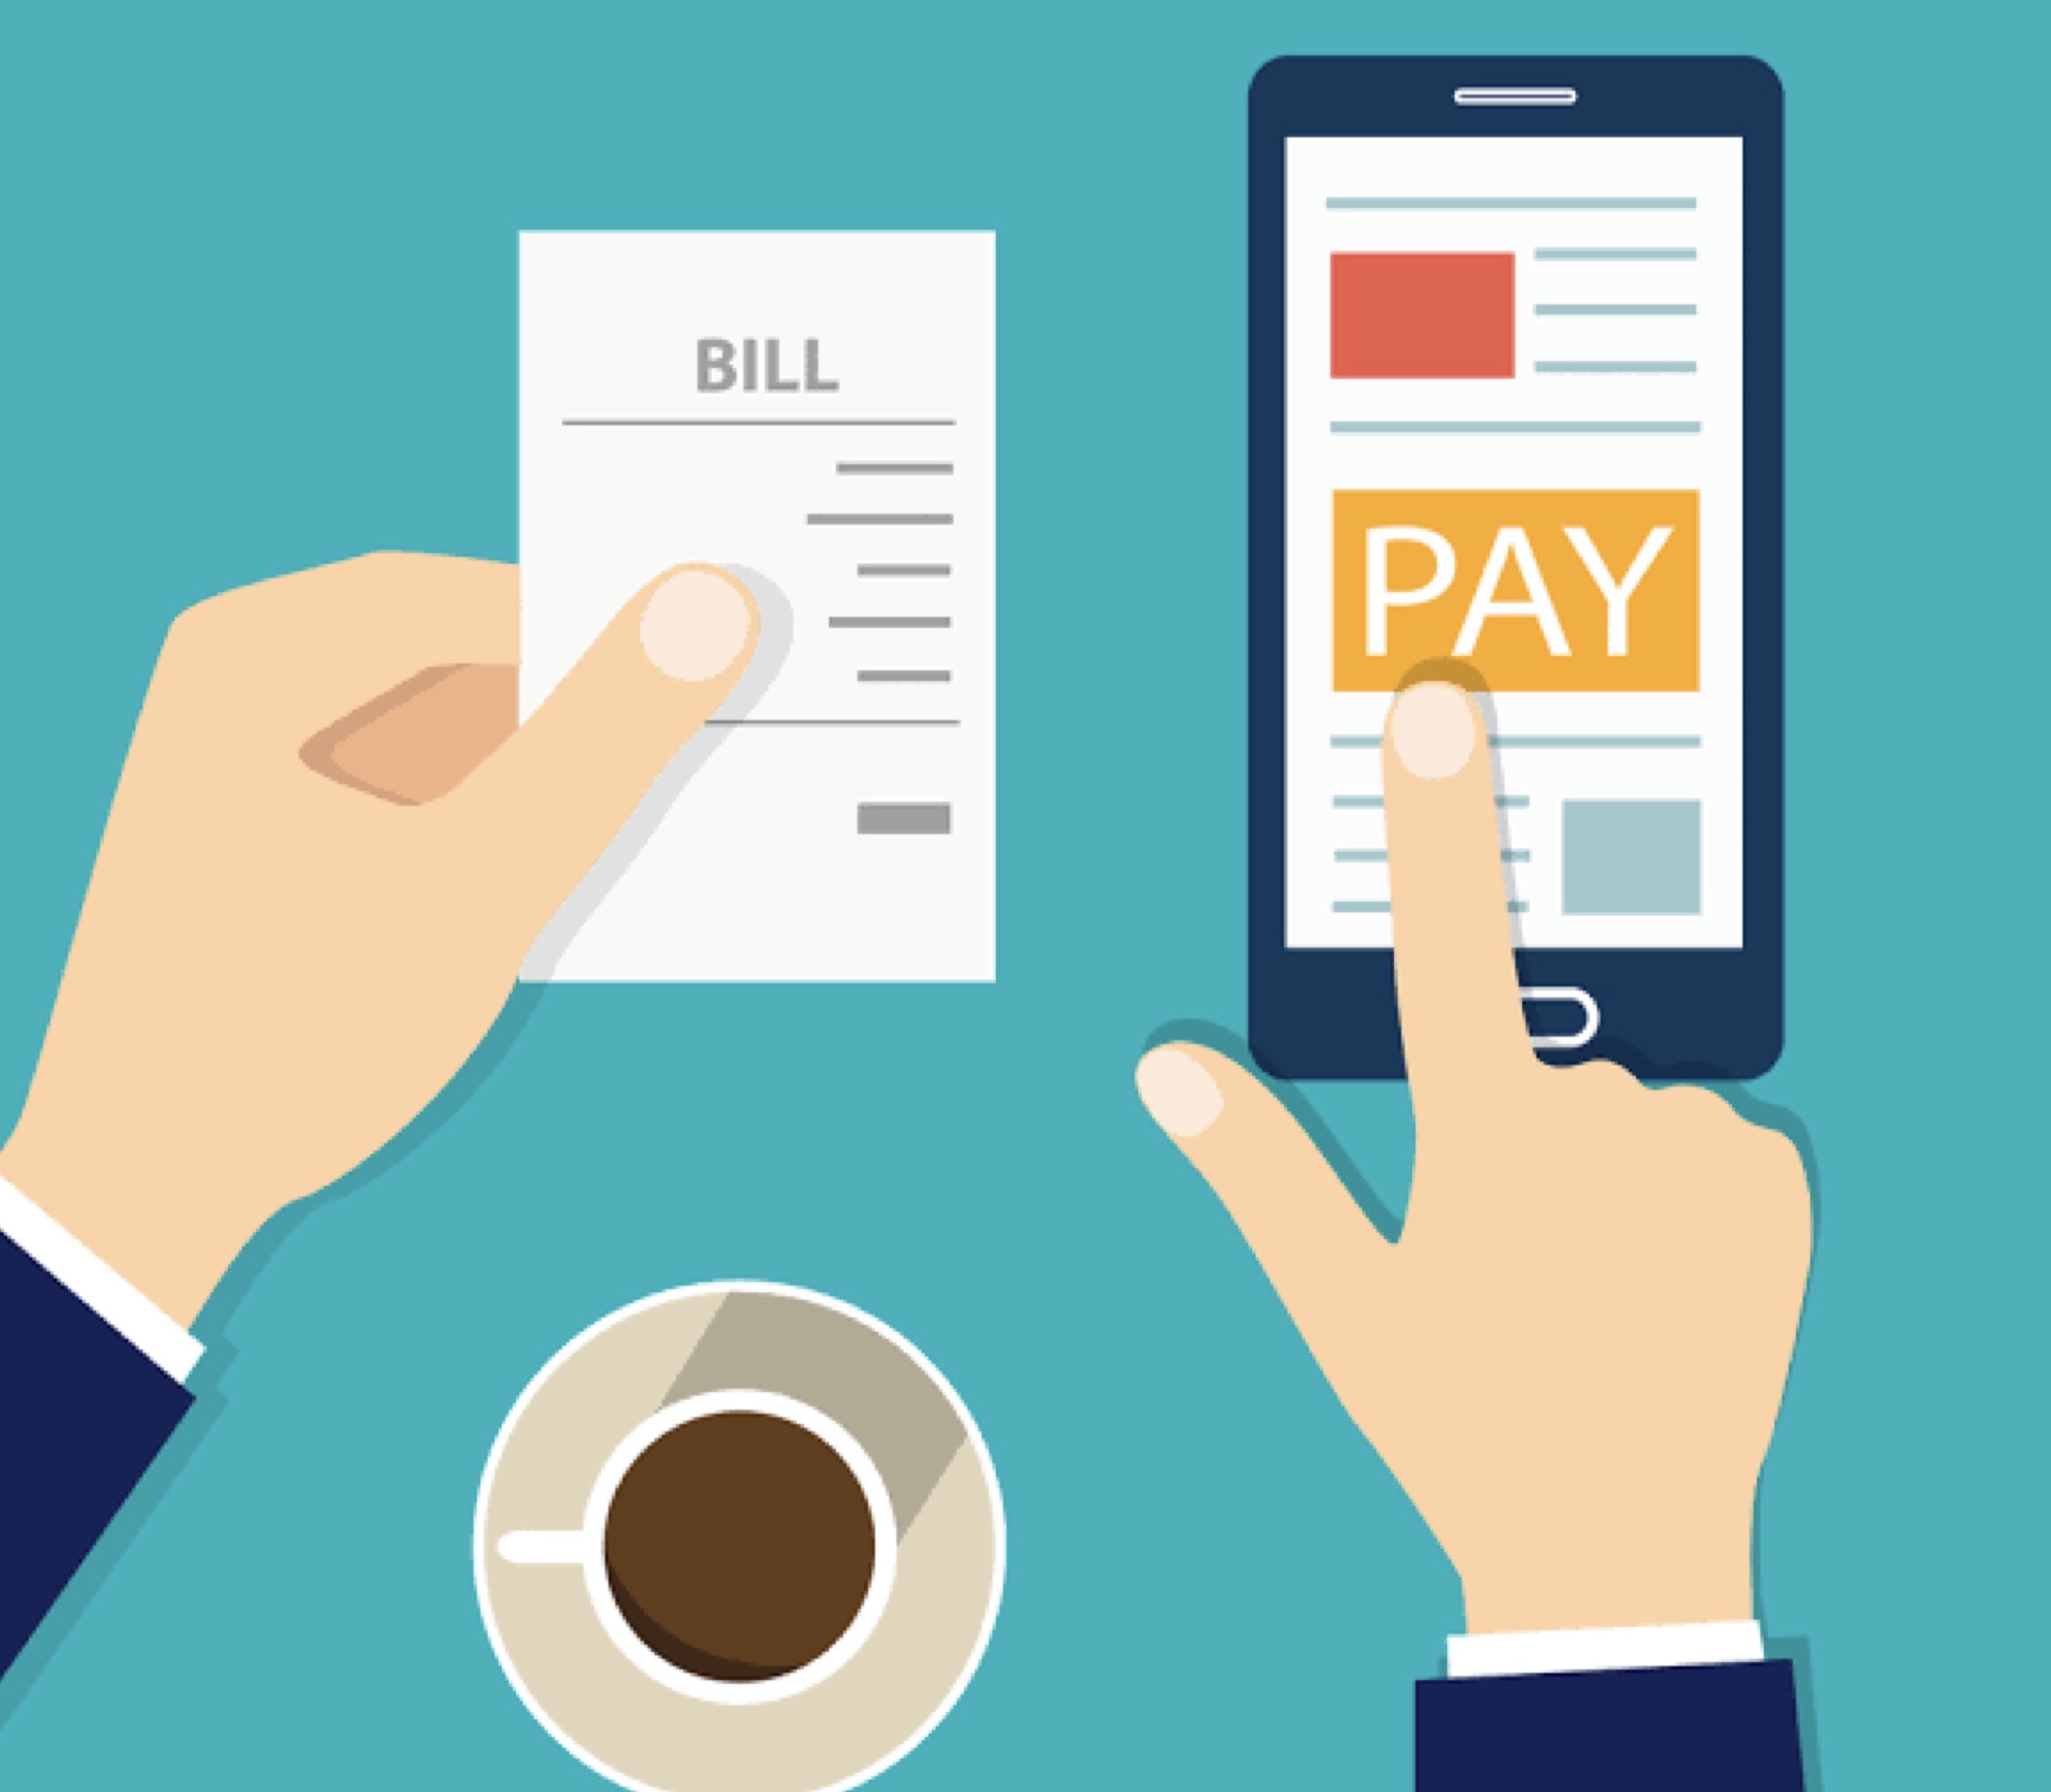 Pay. Pay Bills. Bill payment. To pay. Защита онлайн платежей.